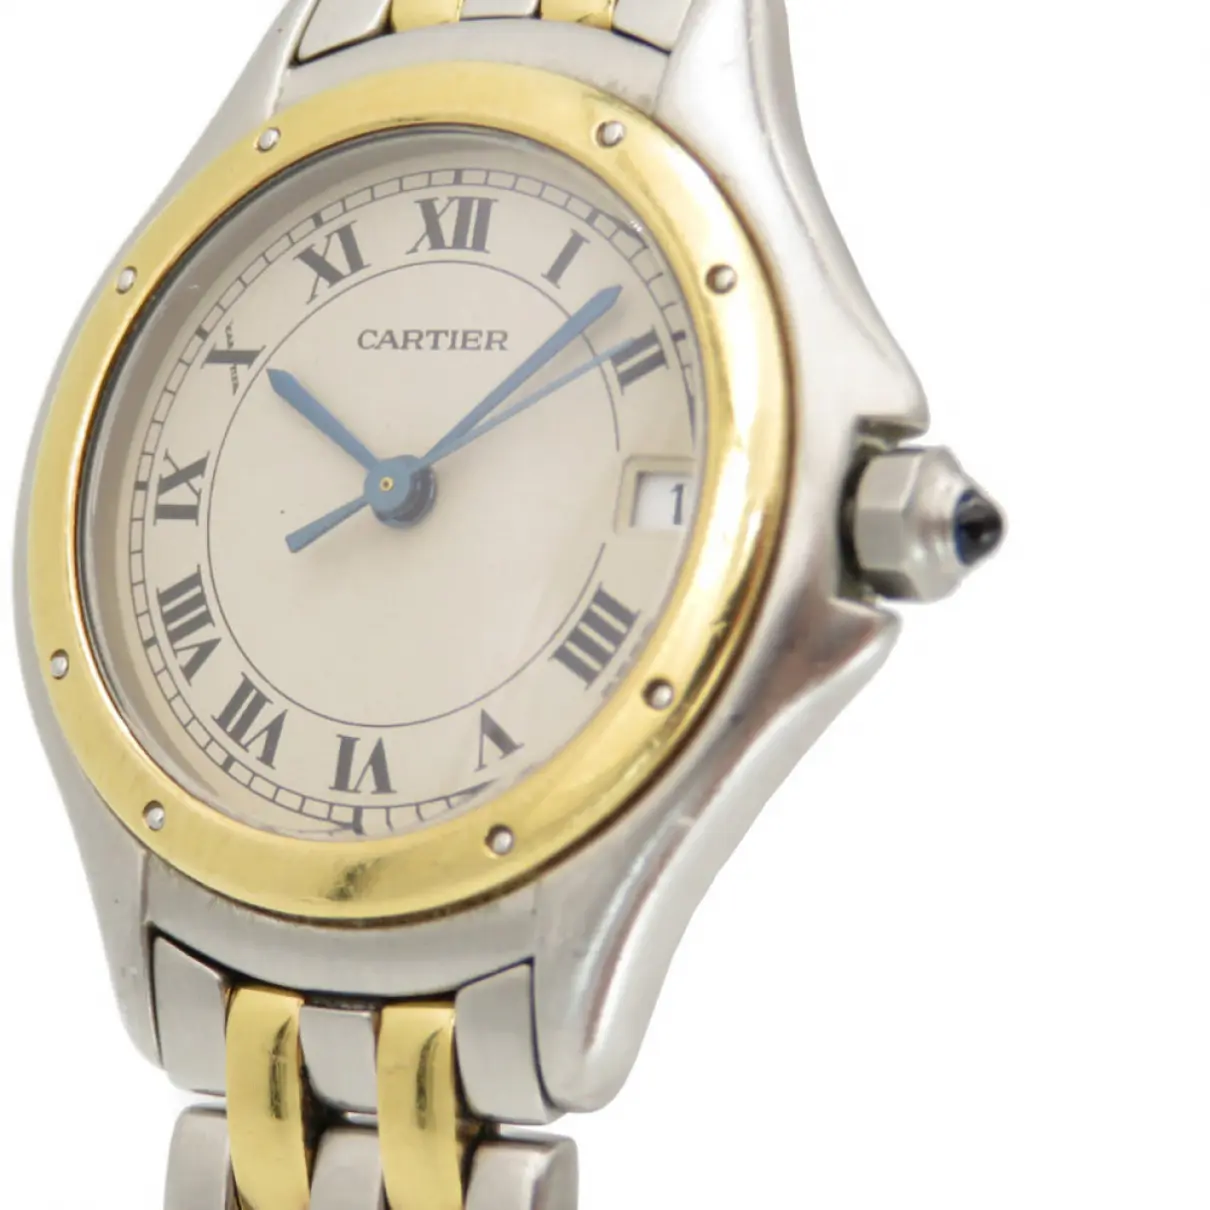 Buy Cartier Yellow gold watch online